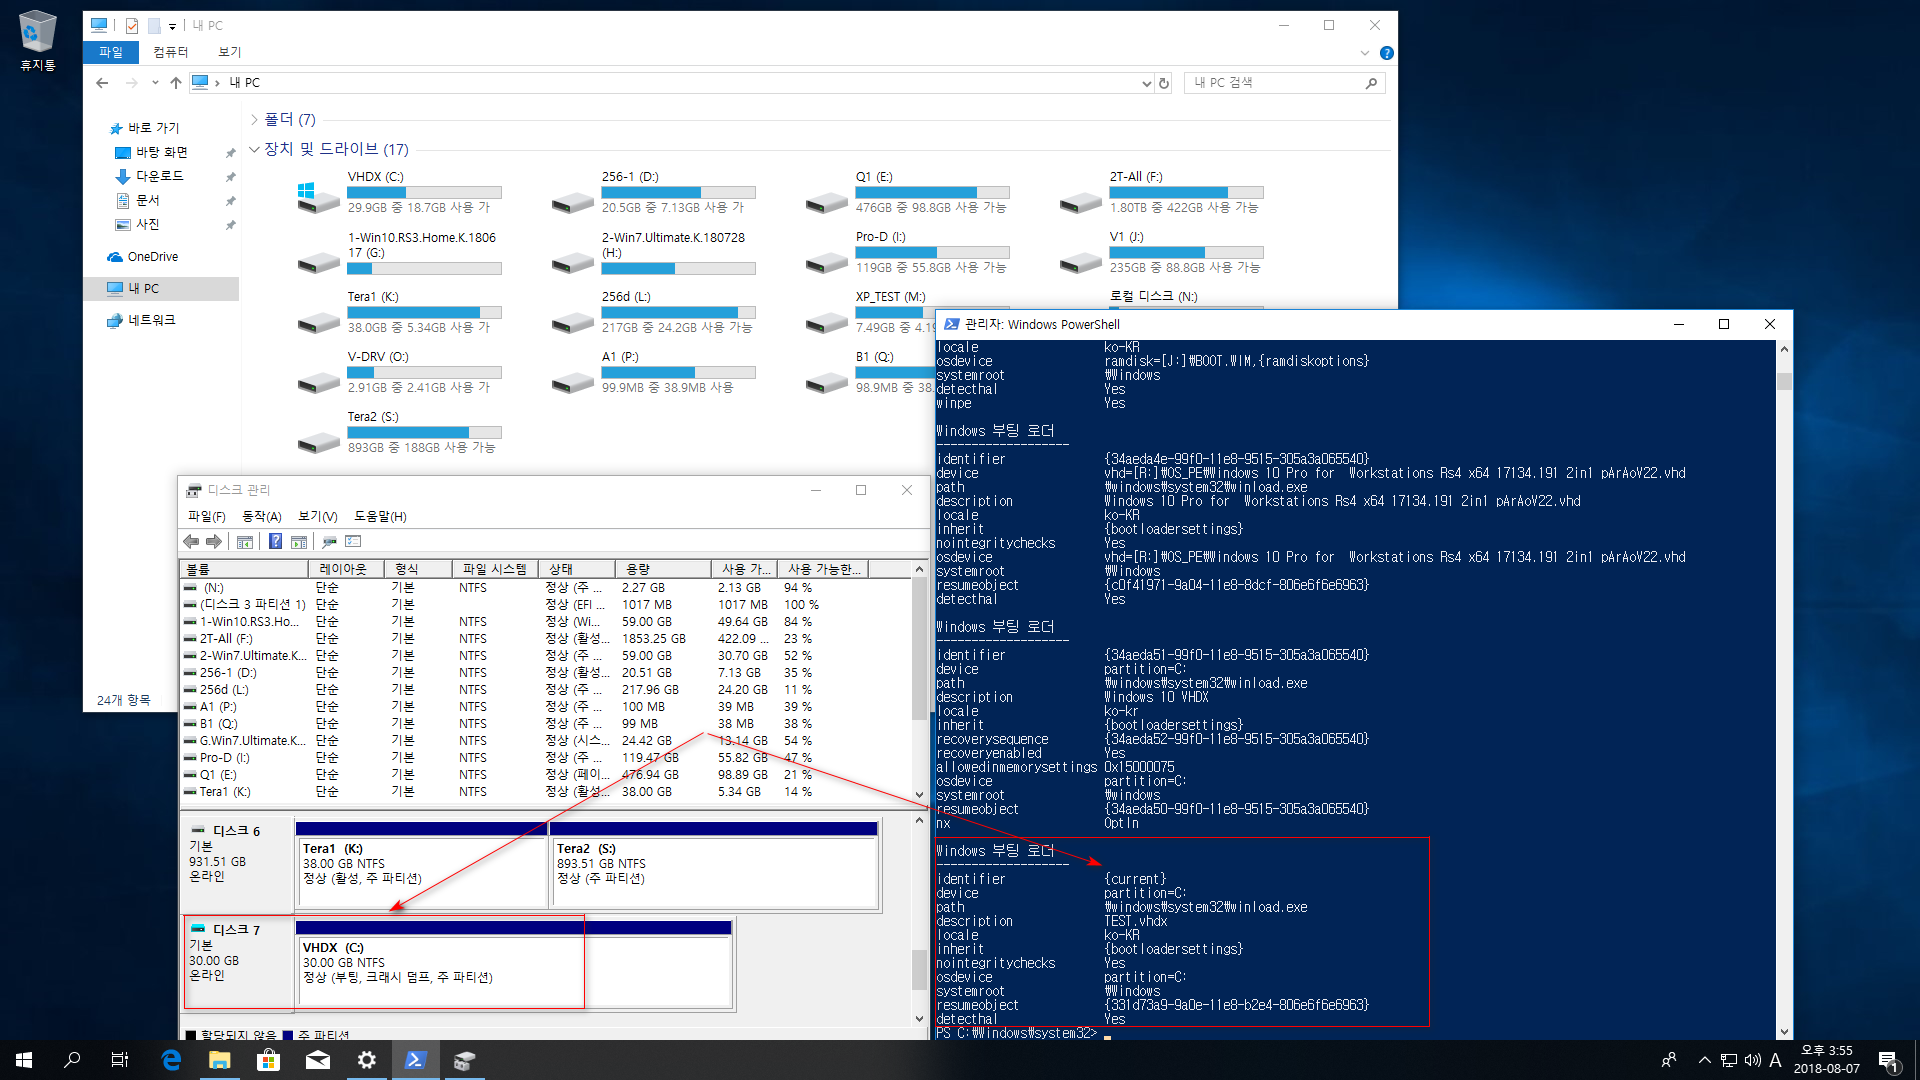 VHD와 VHDX 부팅등록 [우클릭] 테스트 - 윈도7 설치하여 - 이번에는 윈도10 vhdx 를 만들어서 부팅 등록 테스트 - 실컴이라서 스샷은 못 했는데 부팅 때 0xc03a0001 - bcd 구성 에러 나옴 - bcdboot로 윈도10용 부팅 파일을 만든후 다시 부팅등록함 - 부팅 성공 2018-08-07_155611.png